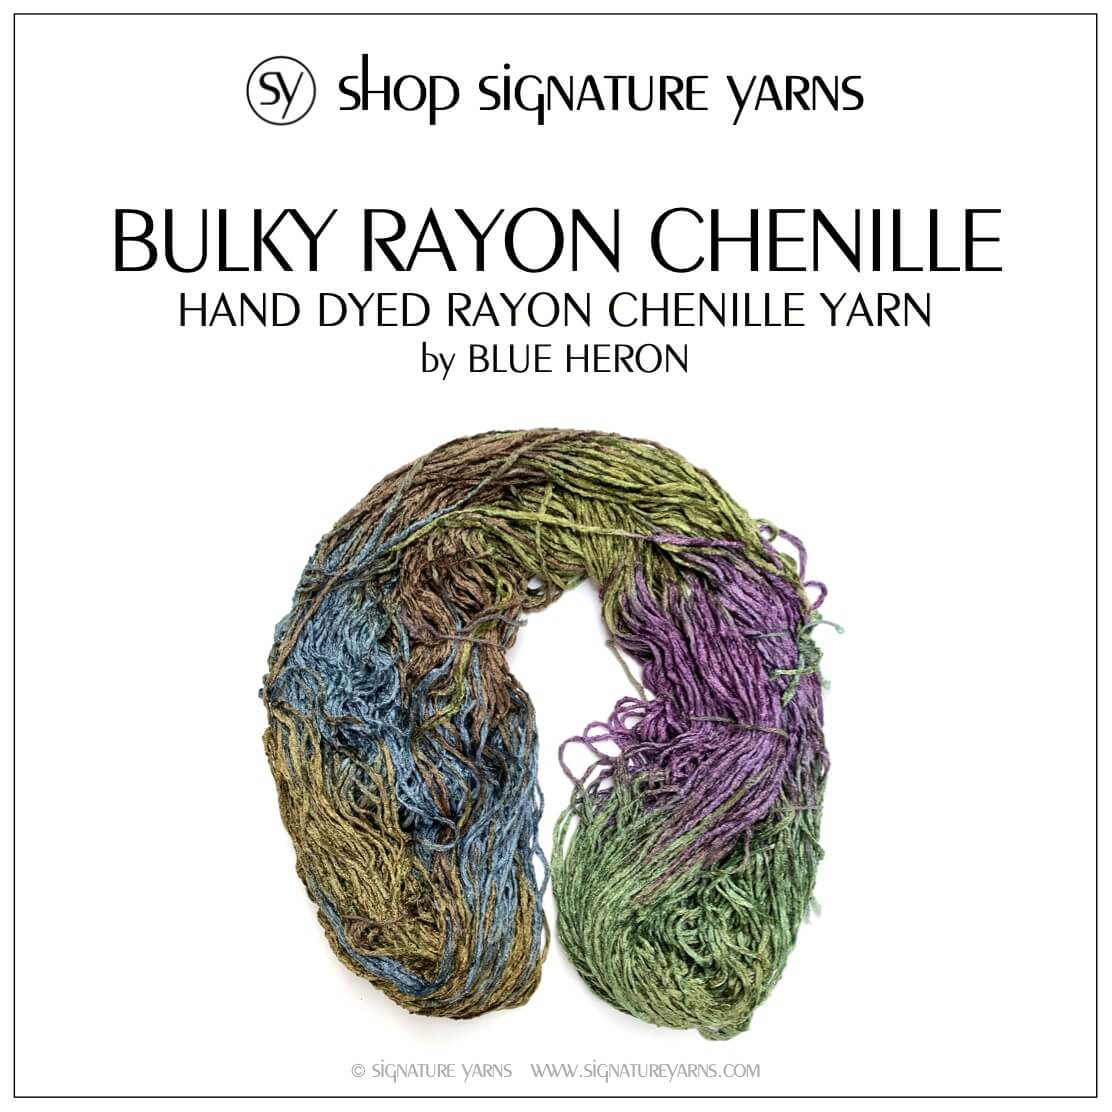 Blue Heron Bulky Rayon Chenille Yarn